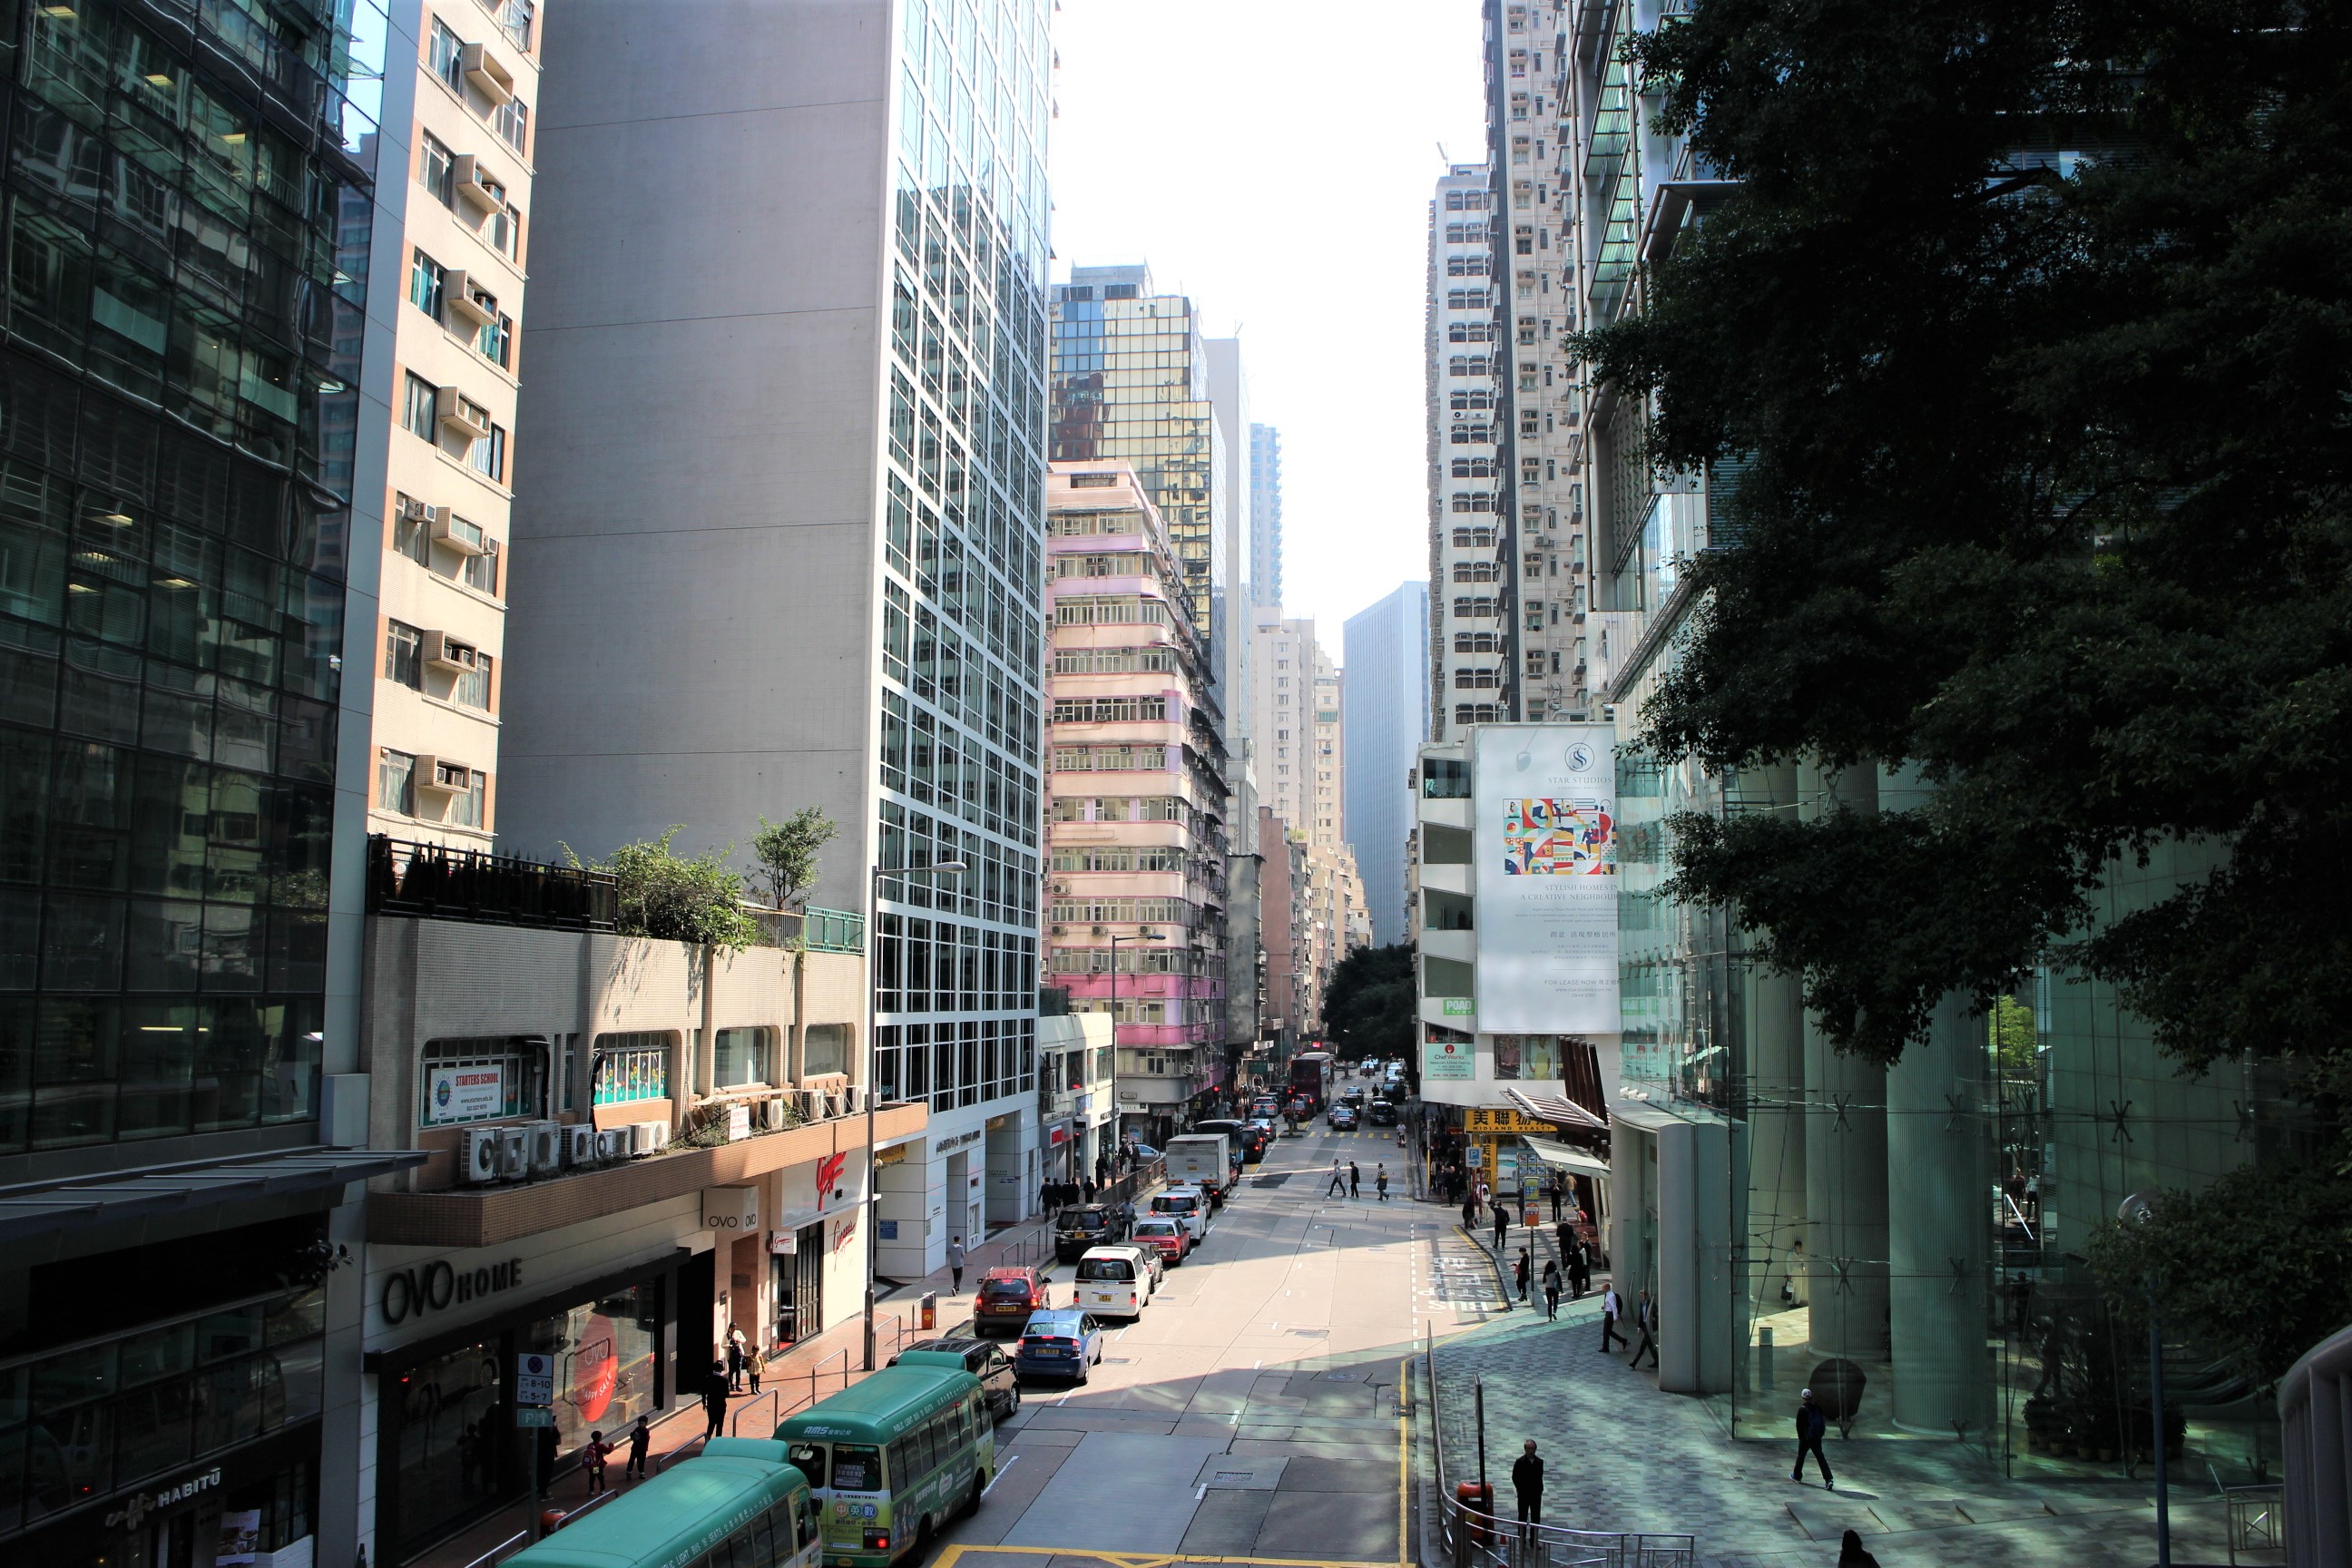 Hong Kong island